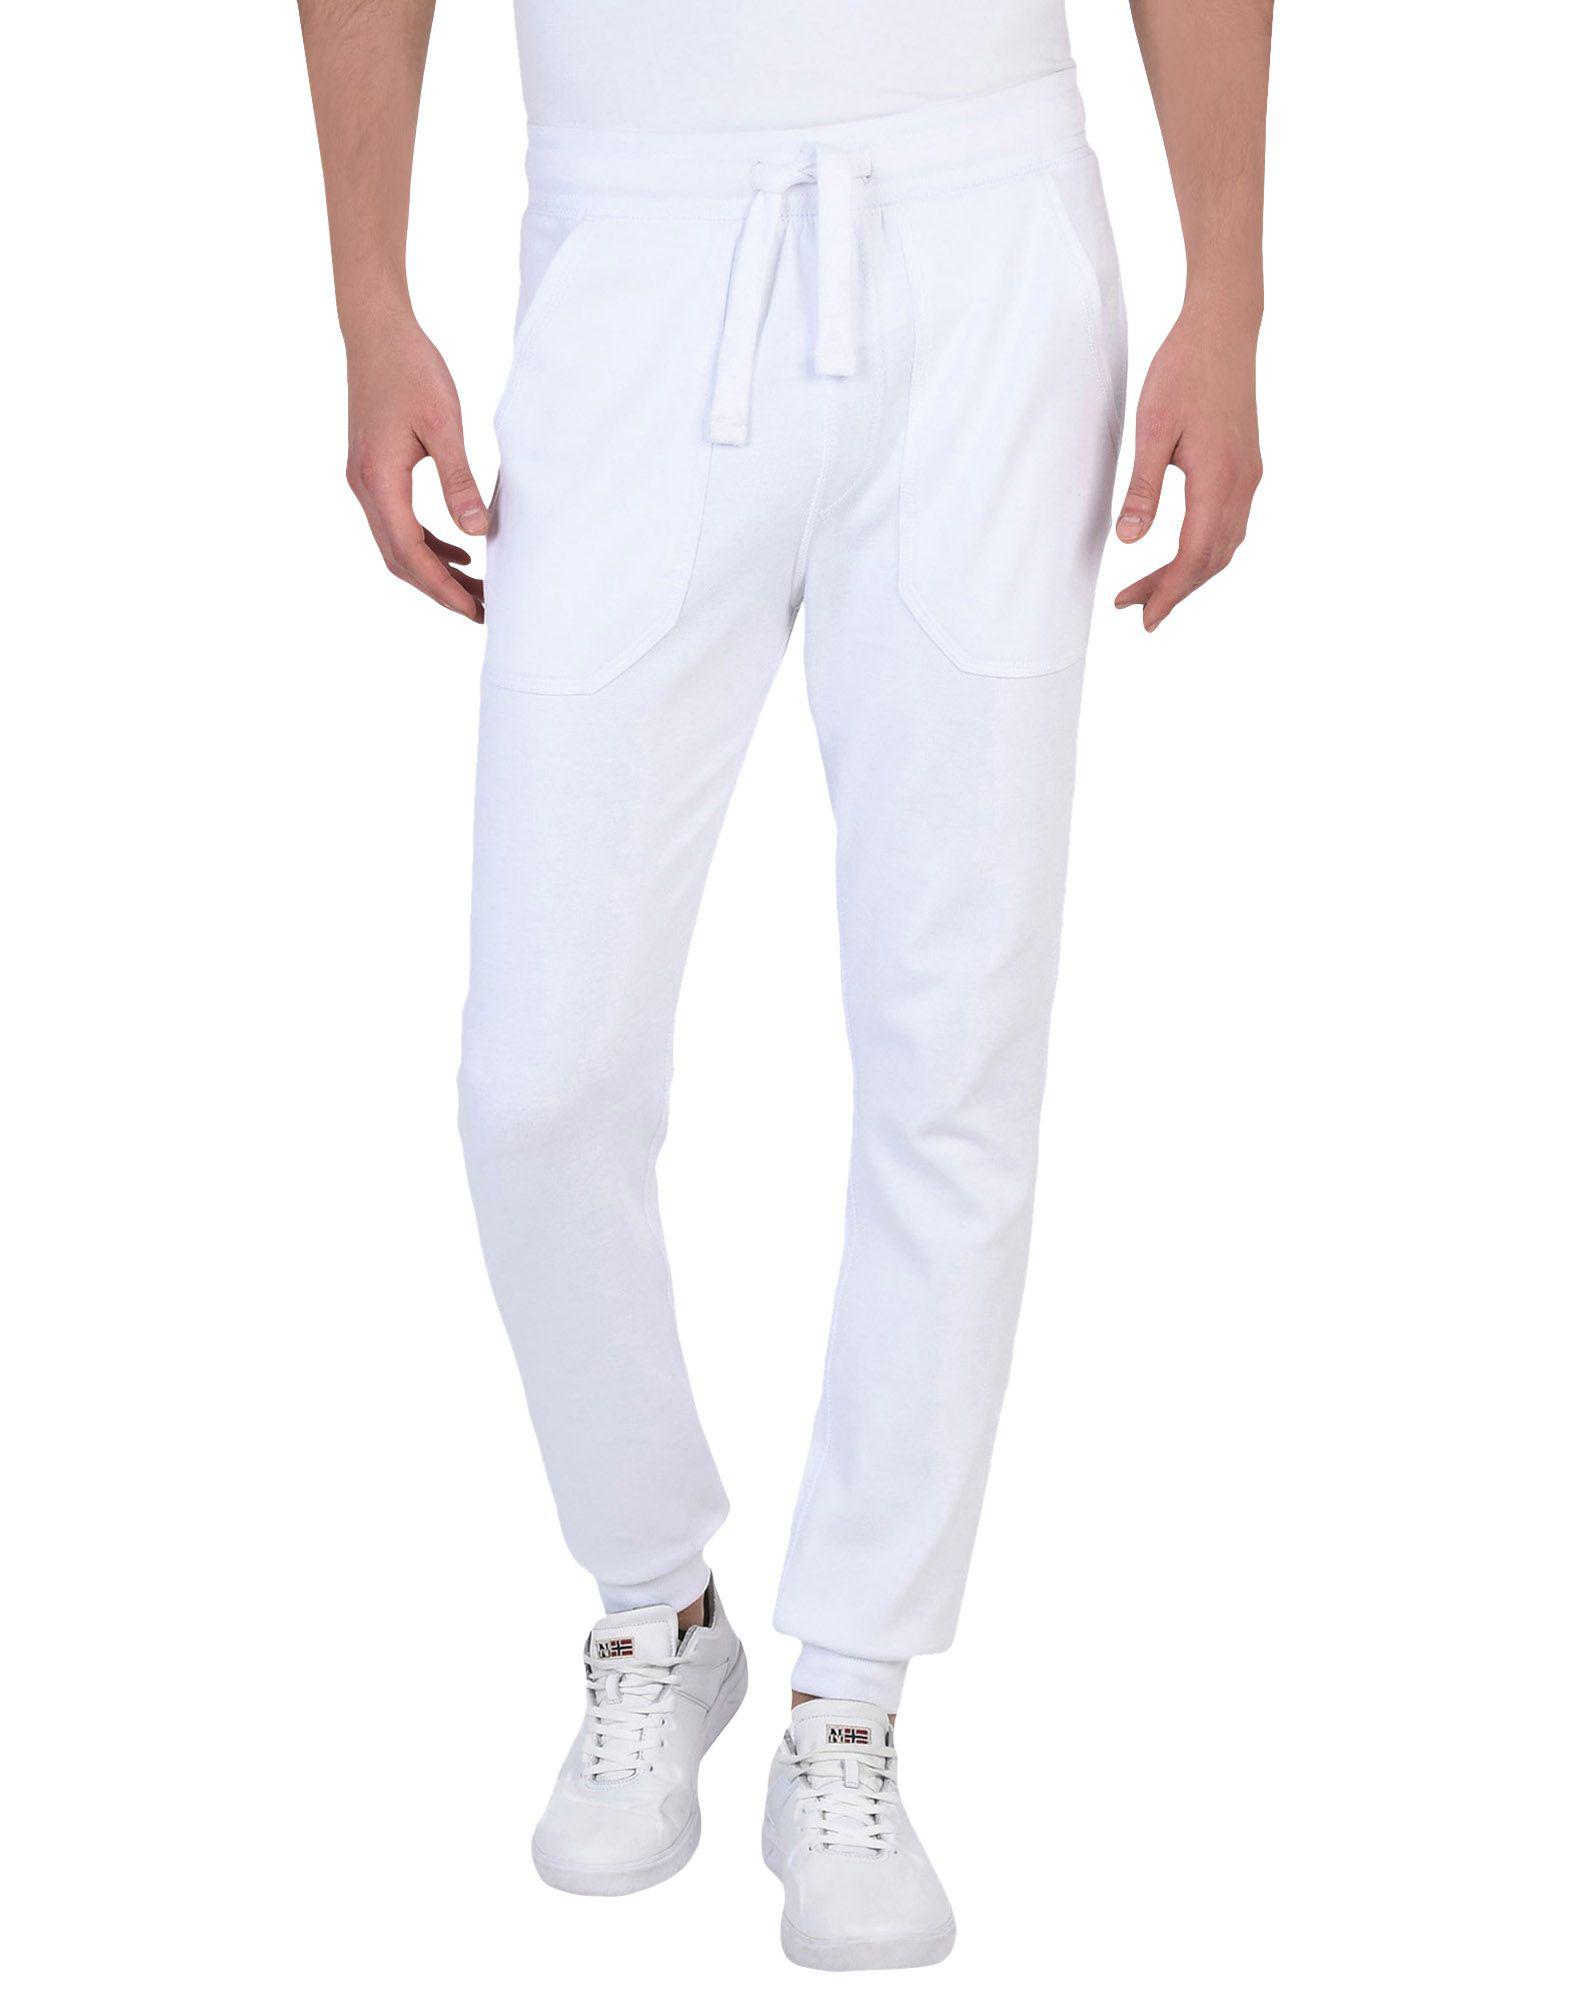 Napapijri Fleece Casual Trouser in White for Men - Lyst